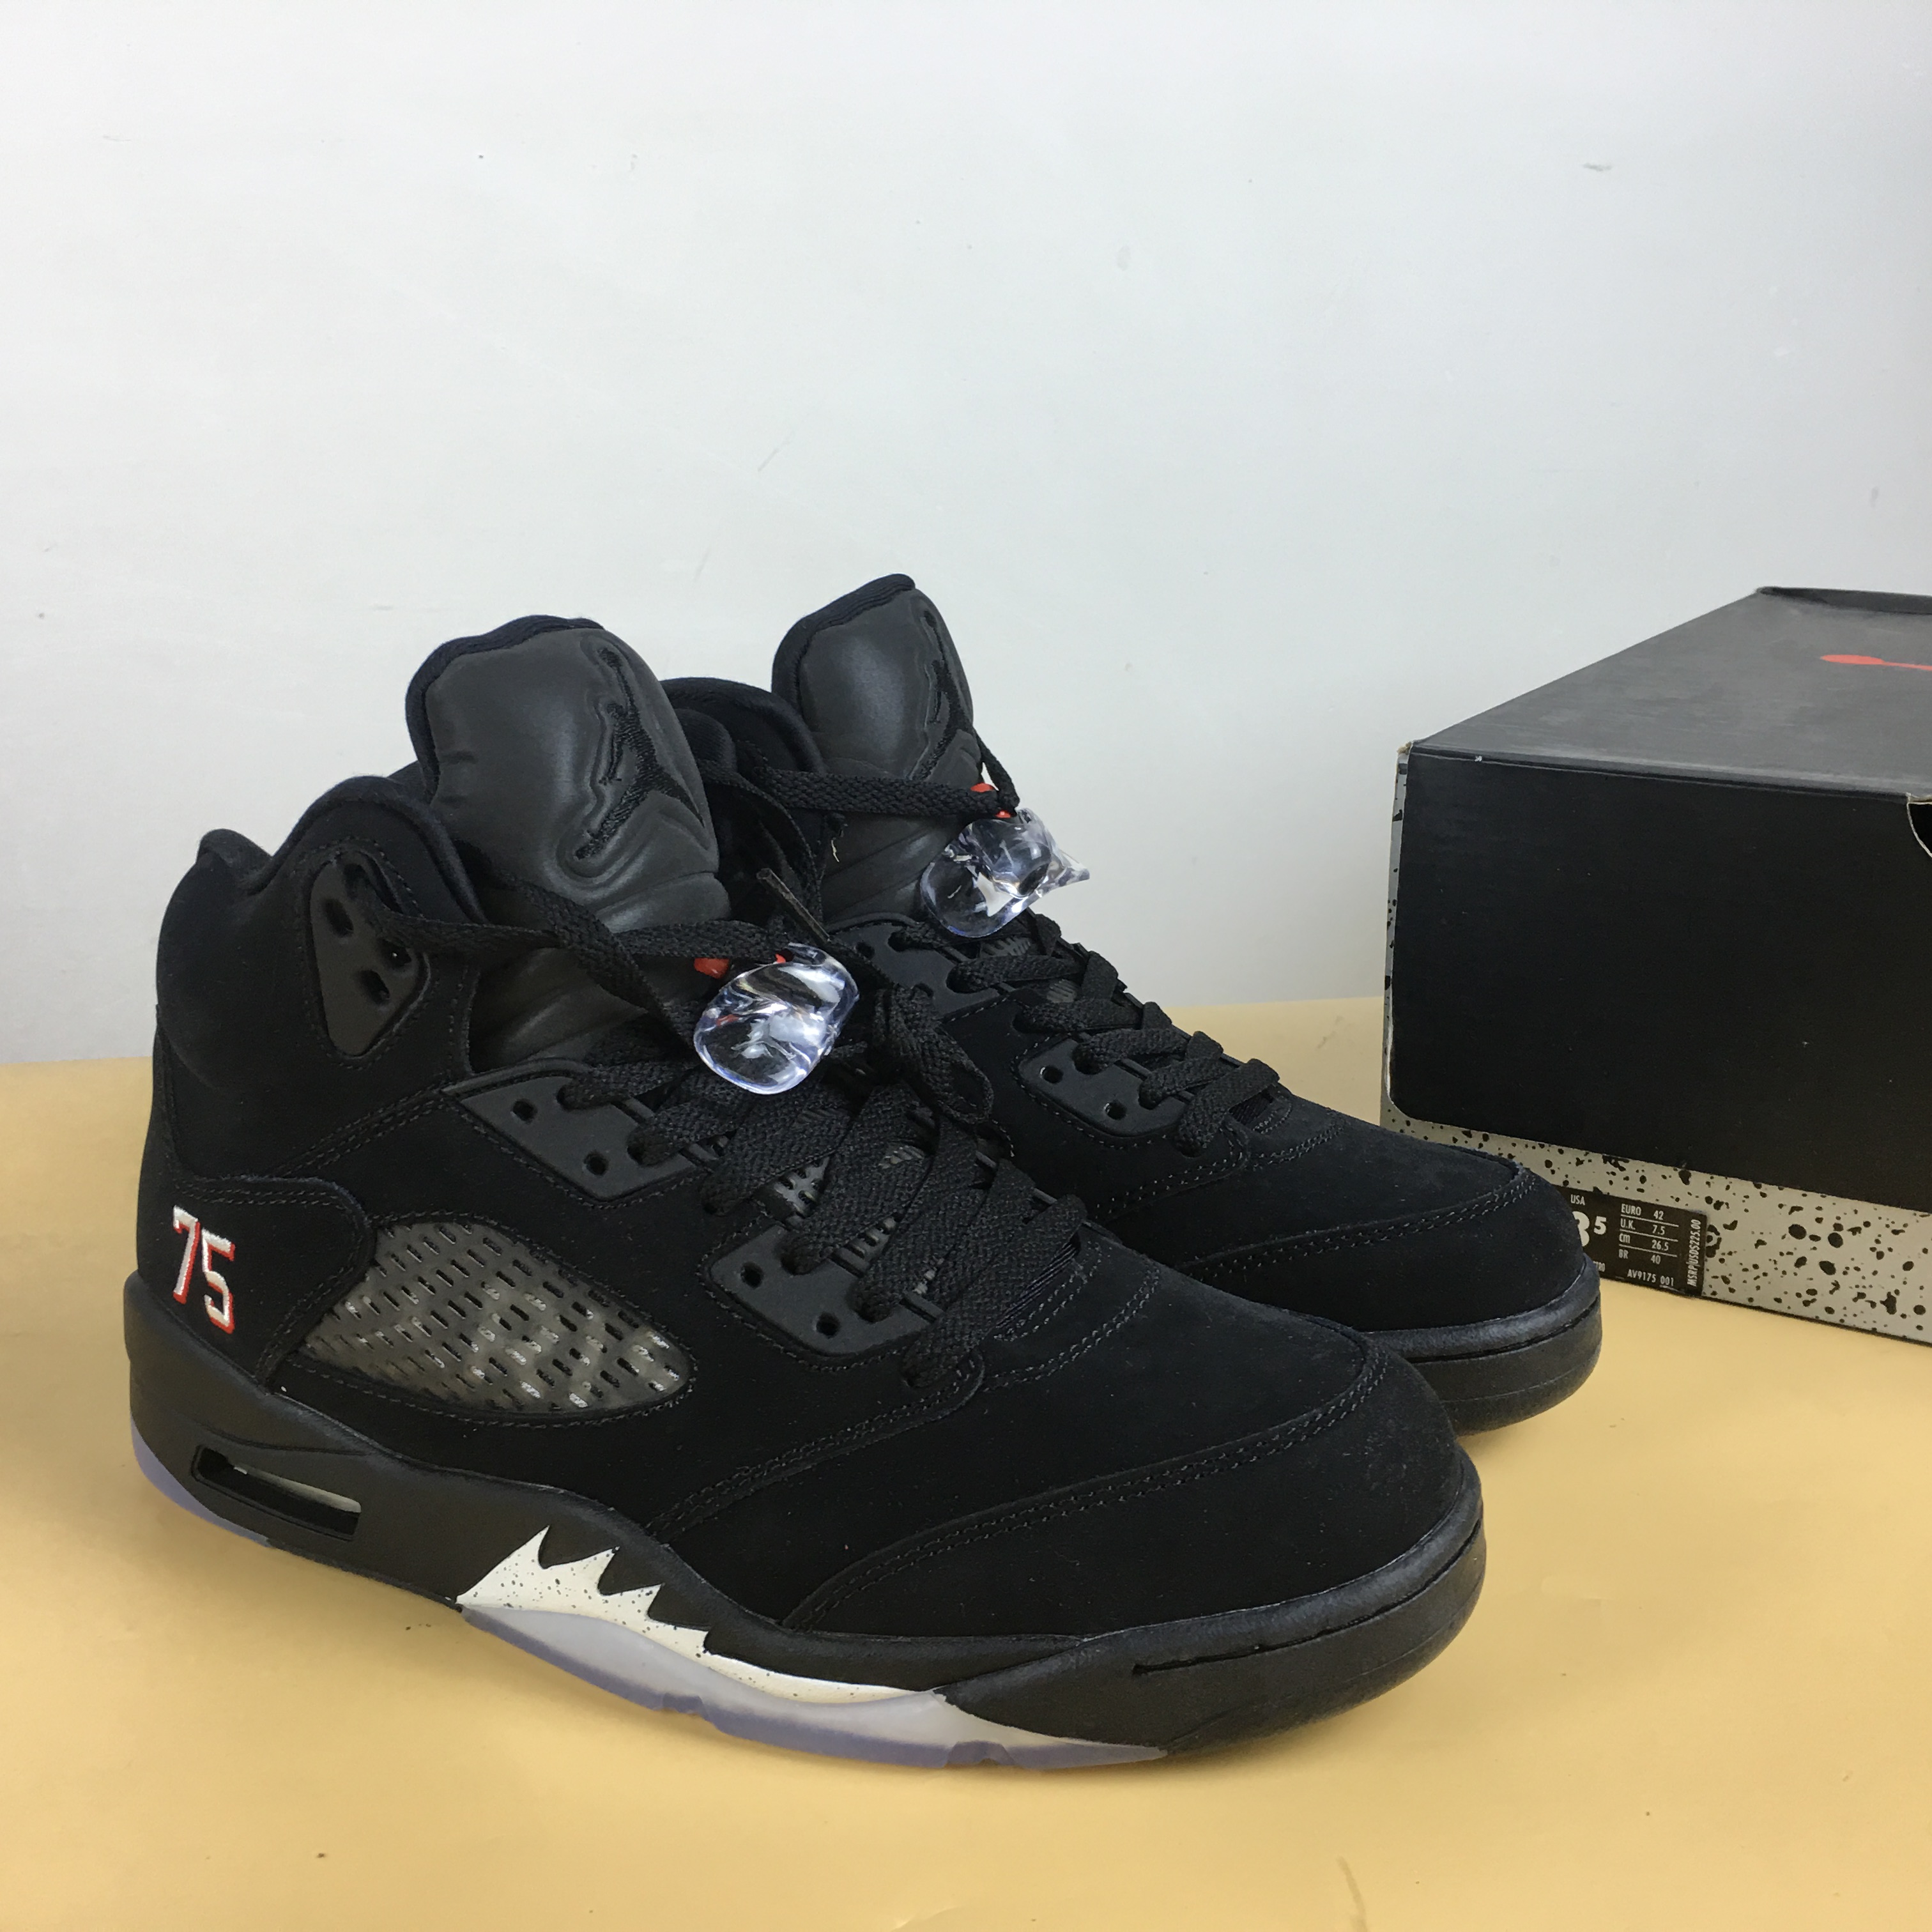 PSG x Air Jordan 5 Cool Black with Number 75 Shoes